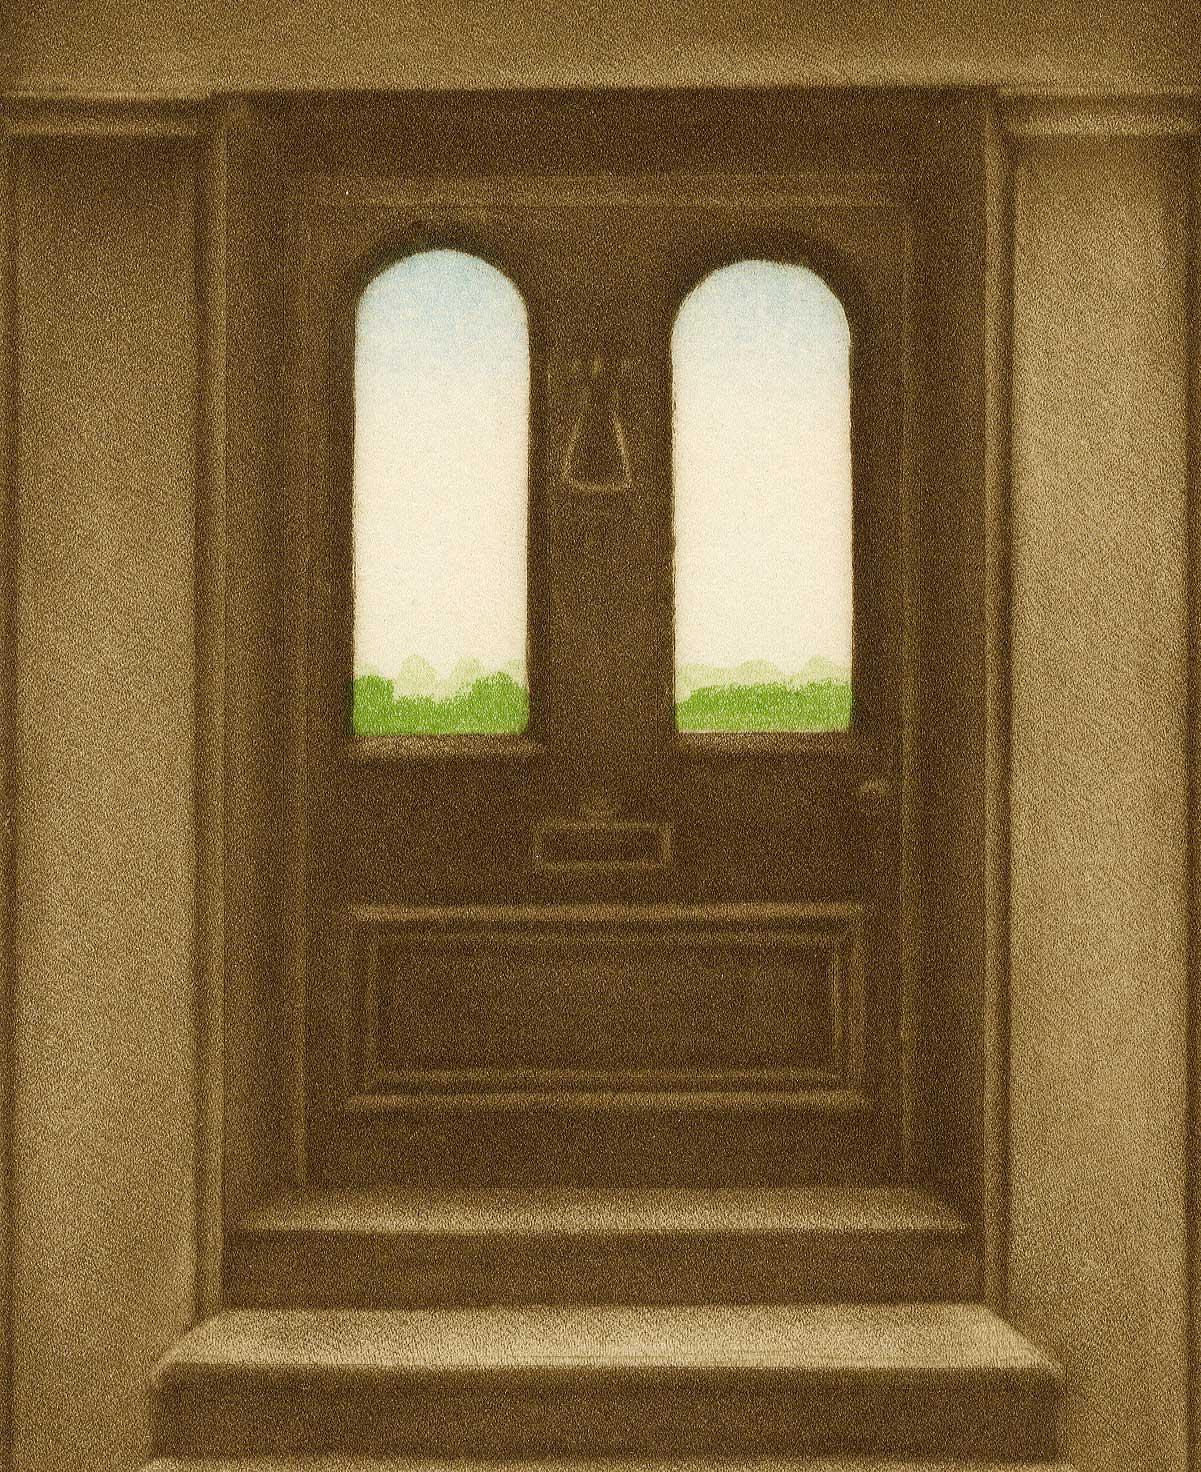 Steps to a Door (landscape seen through door windows) - Modern Print by Dorothea Wight